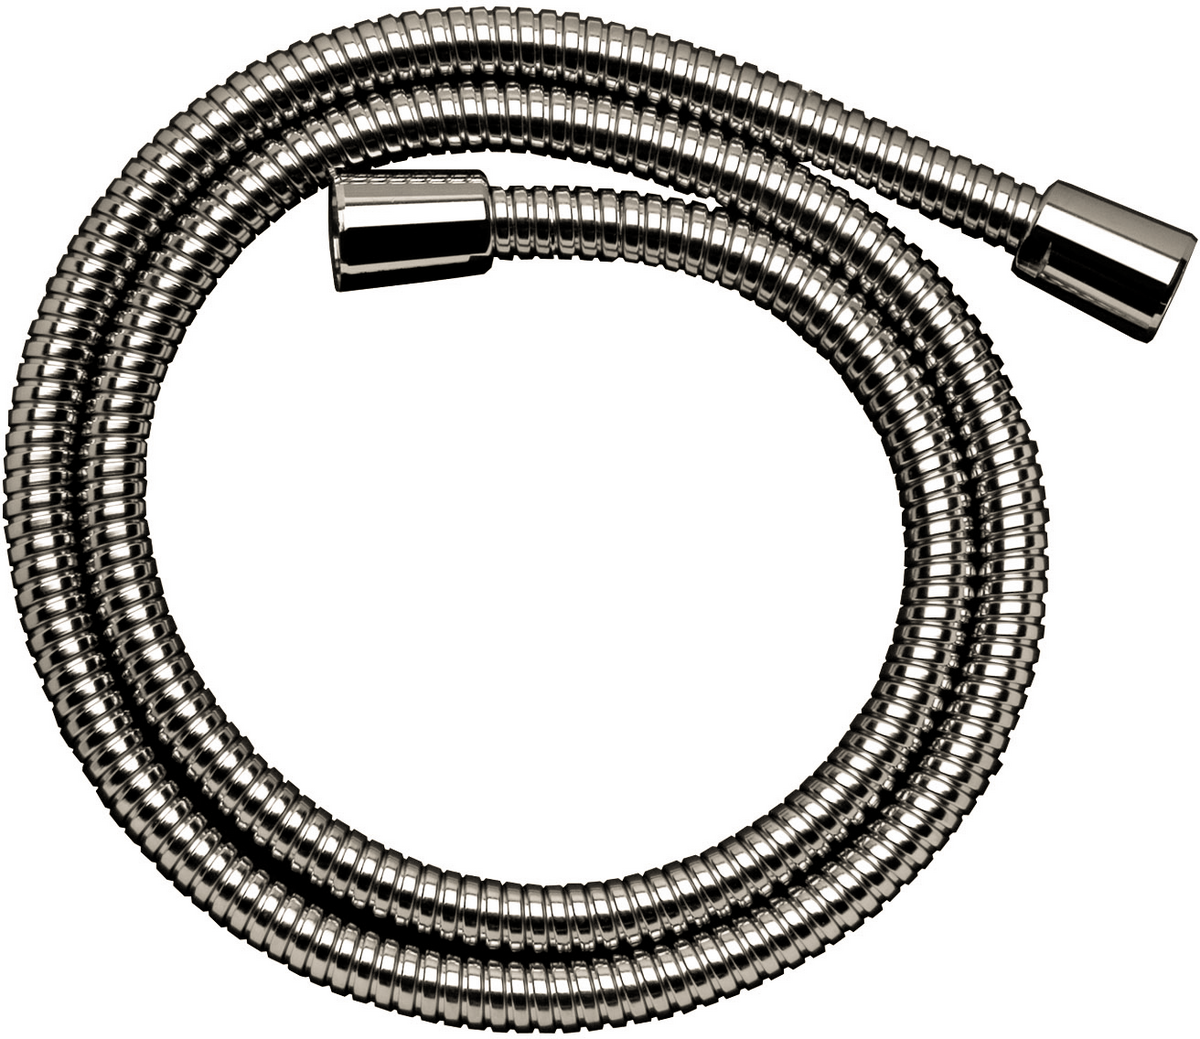 HANSGROHE Metal shower hose 1.25 m #28112830 - Polished Nickel resmi